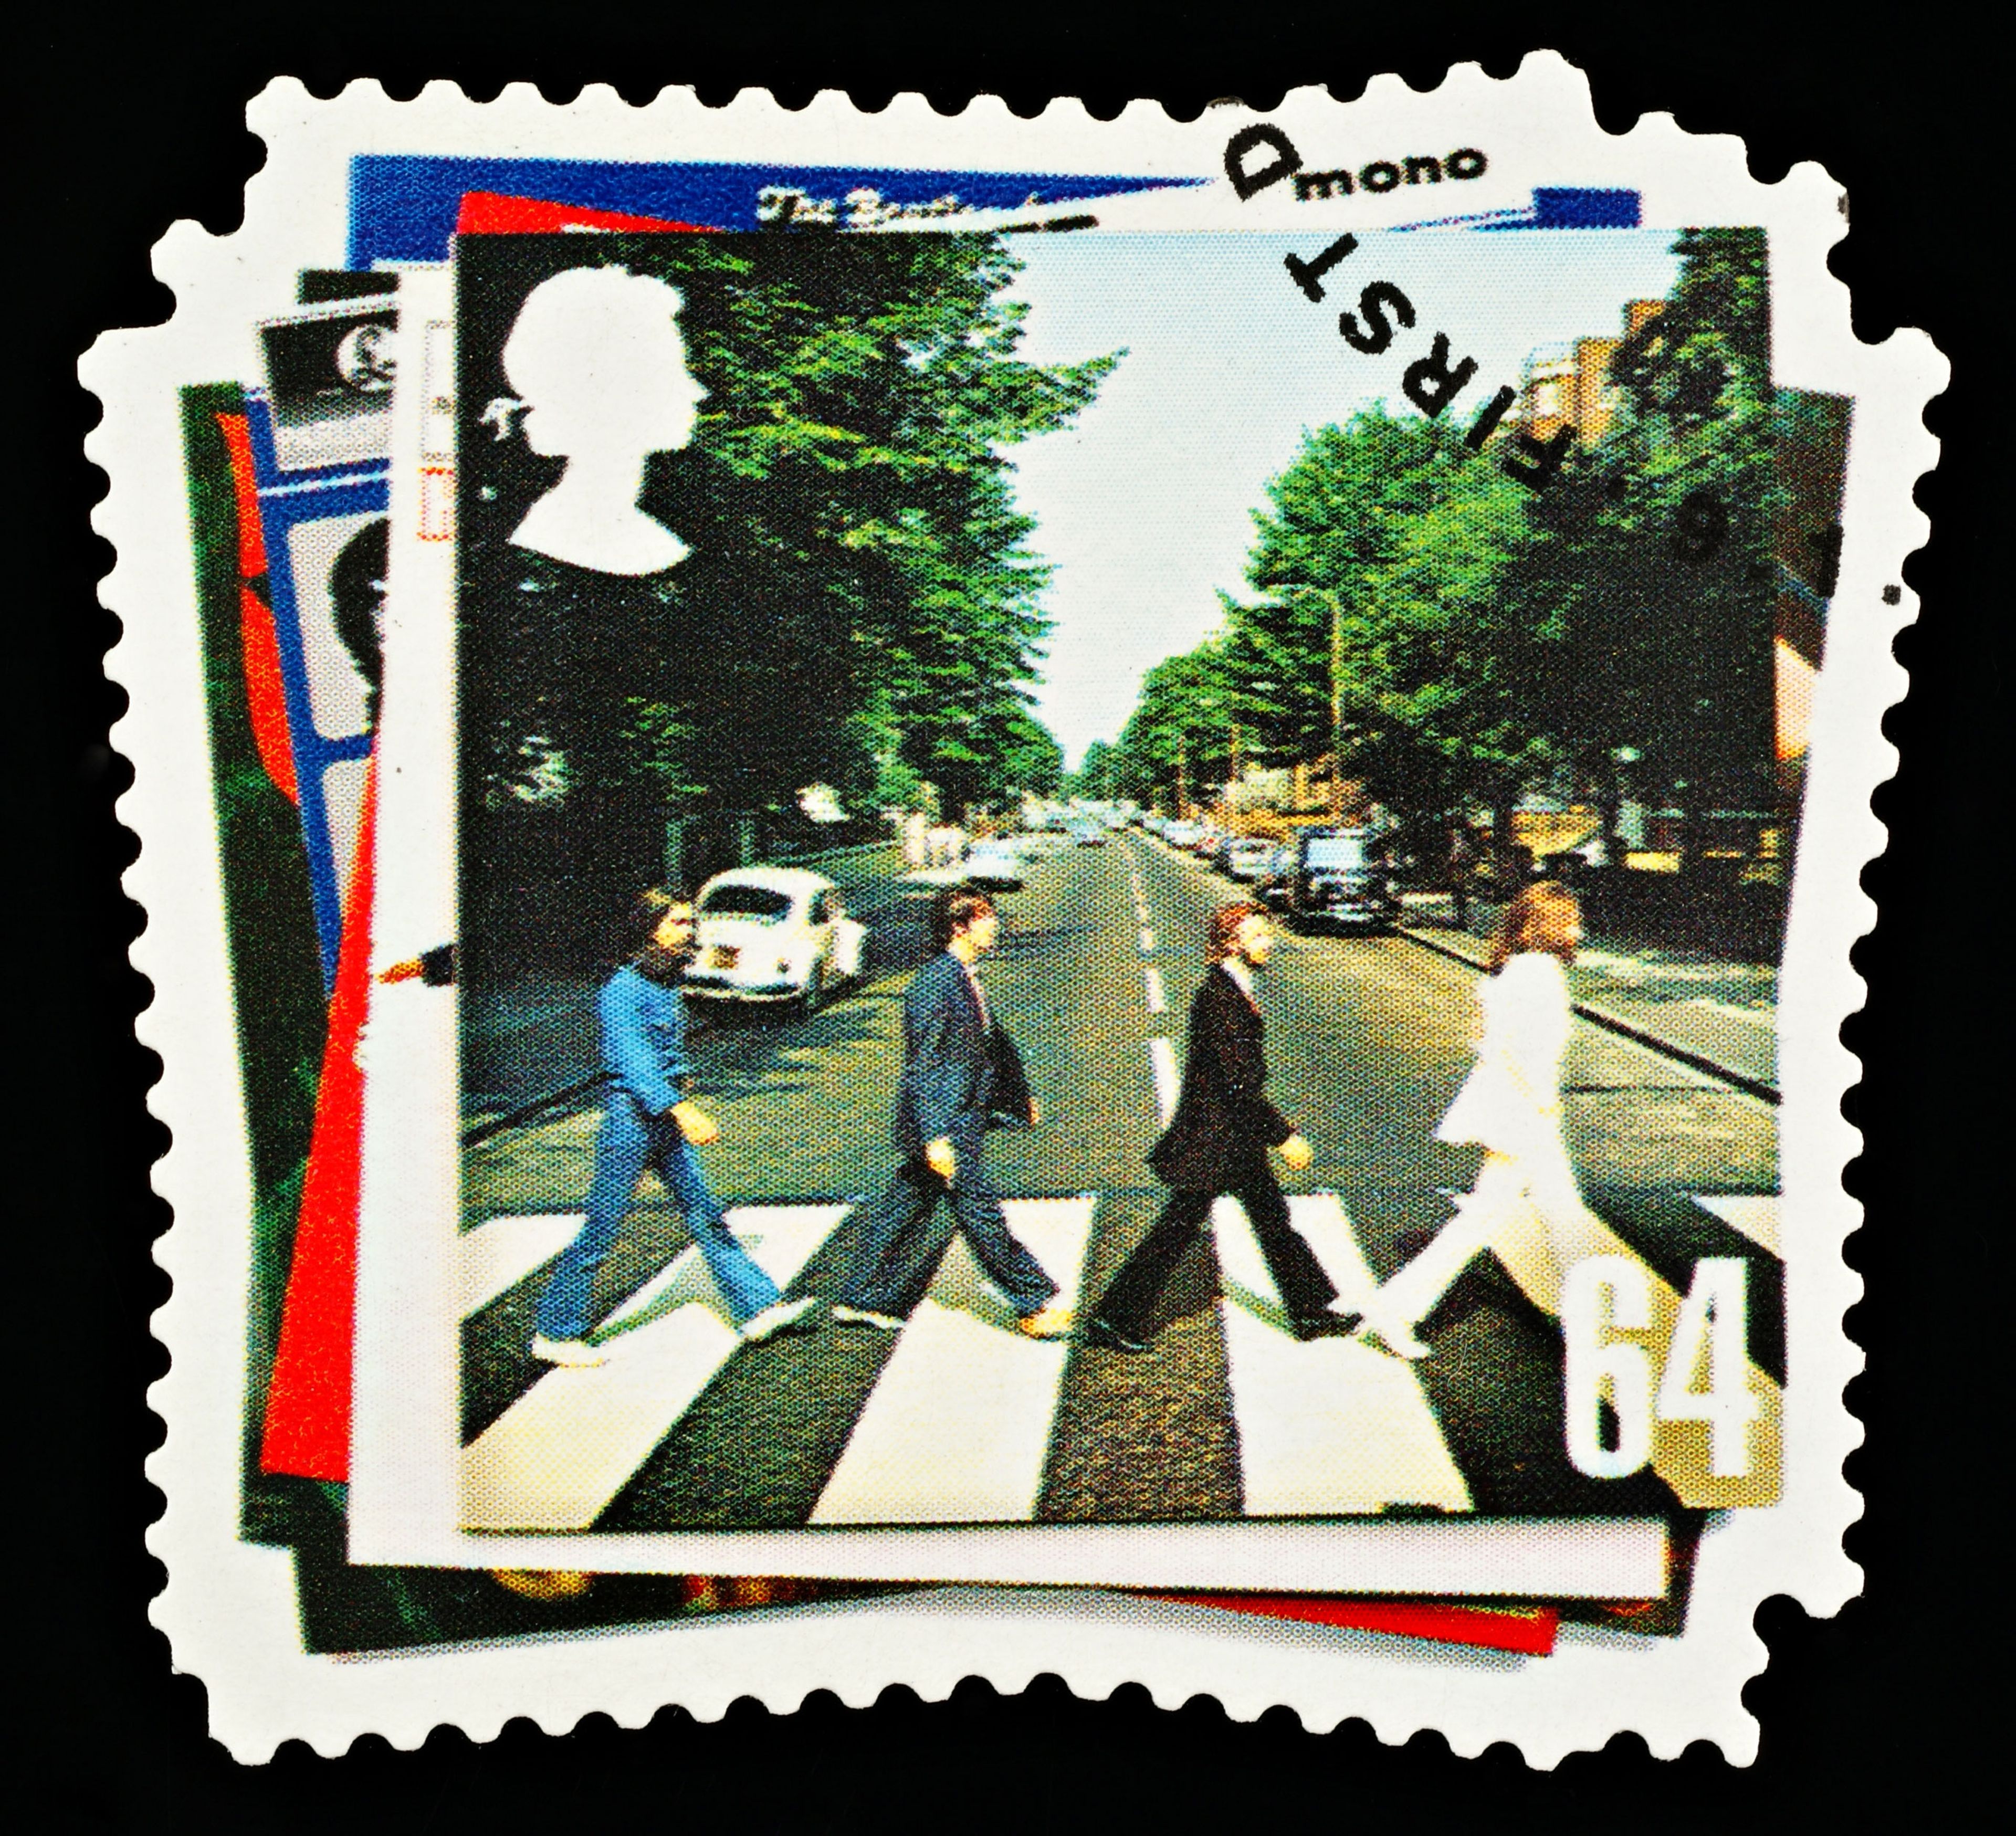 La mítica portada de Abbey Road.